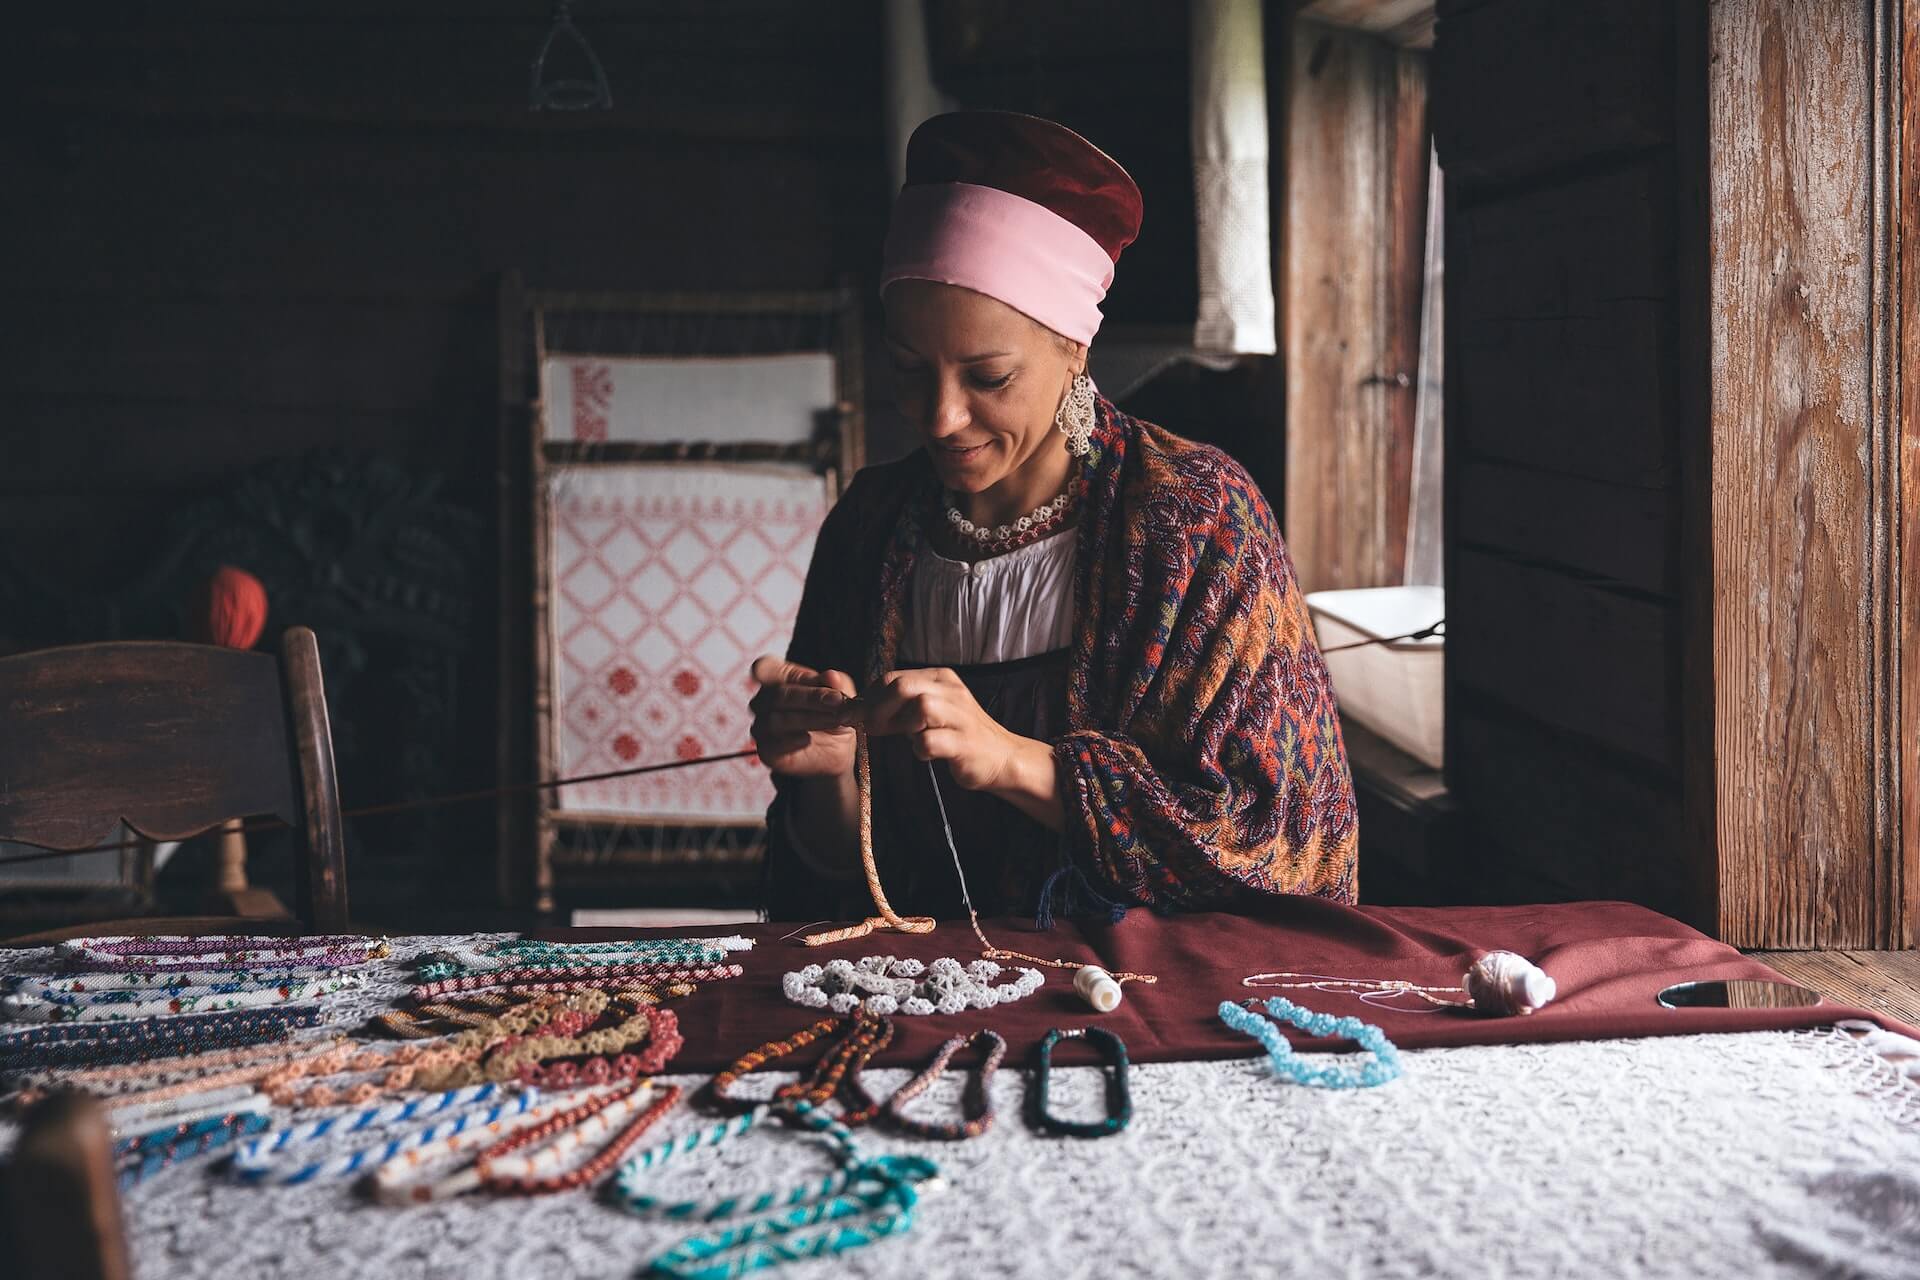 Russian craftswoman